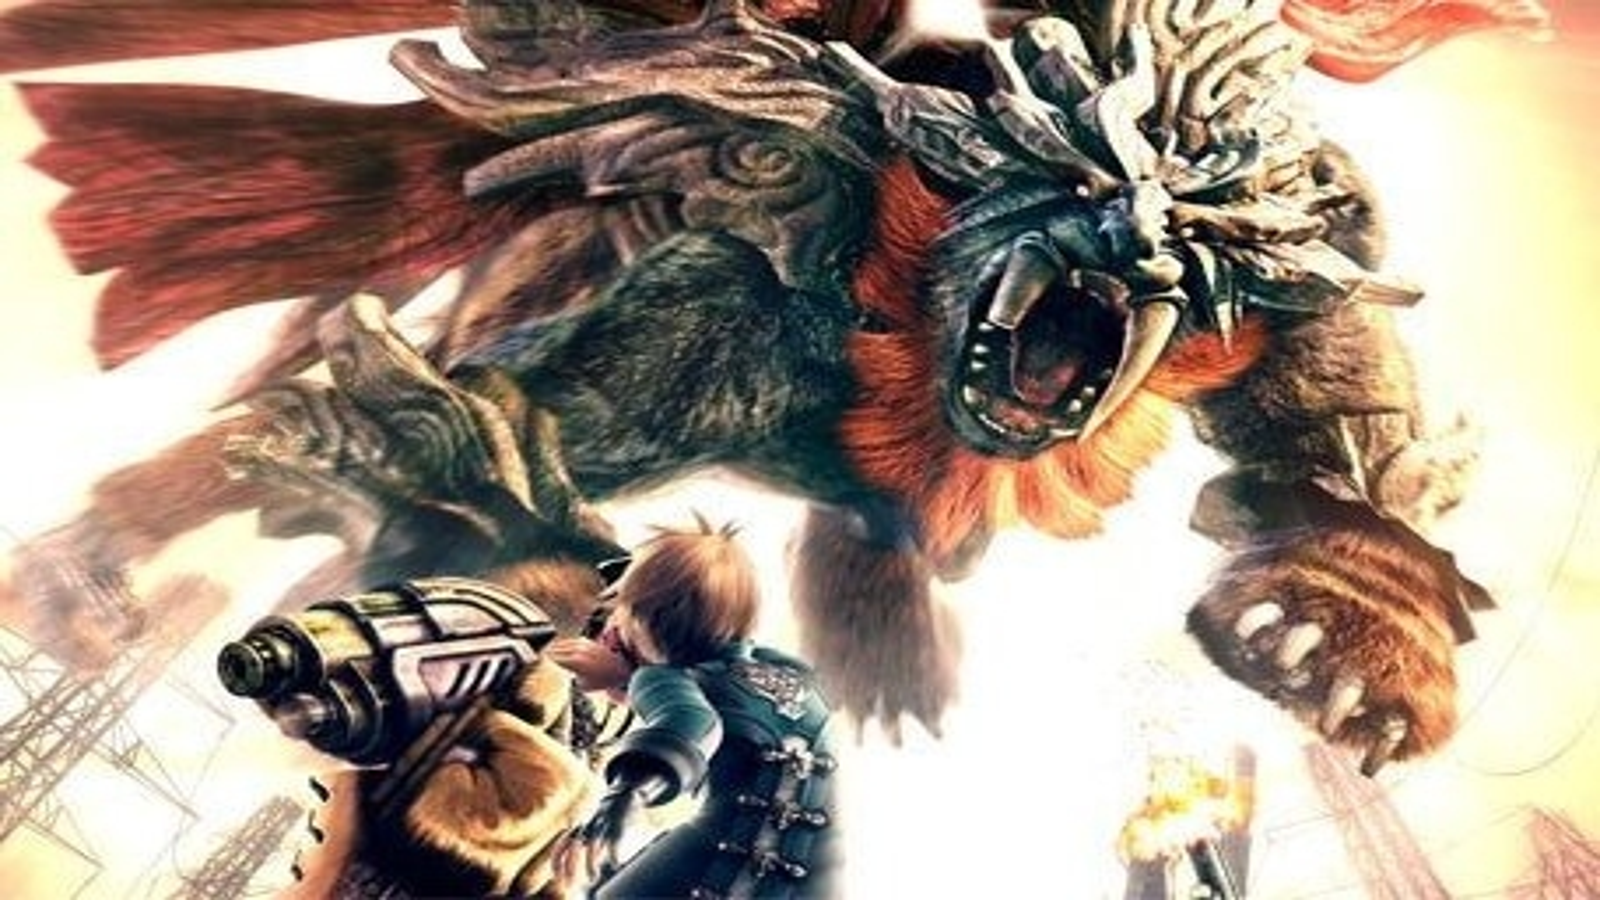 Jogo God Eater 2: Rage Burst - PS4 [video game]